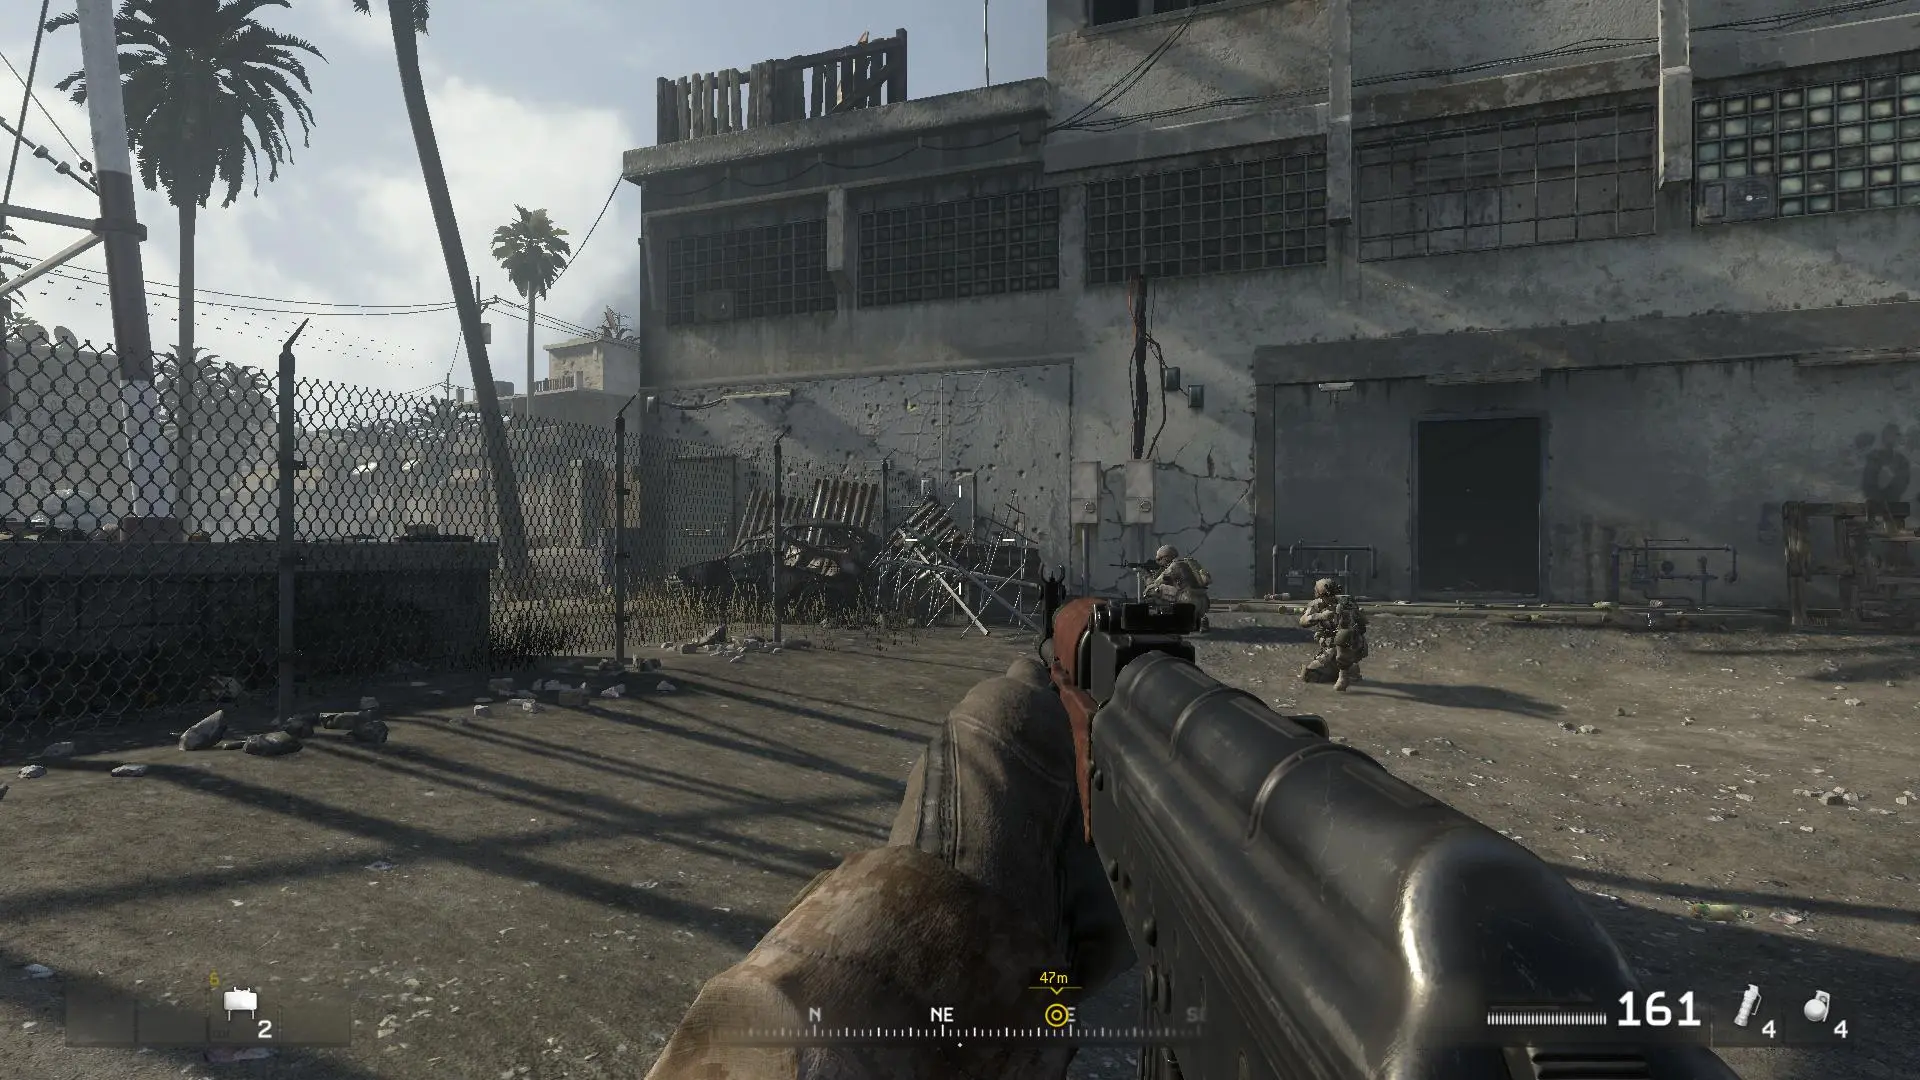 AK-47 airsoft rifle in Call Of Duty 4 Modern Warfare 